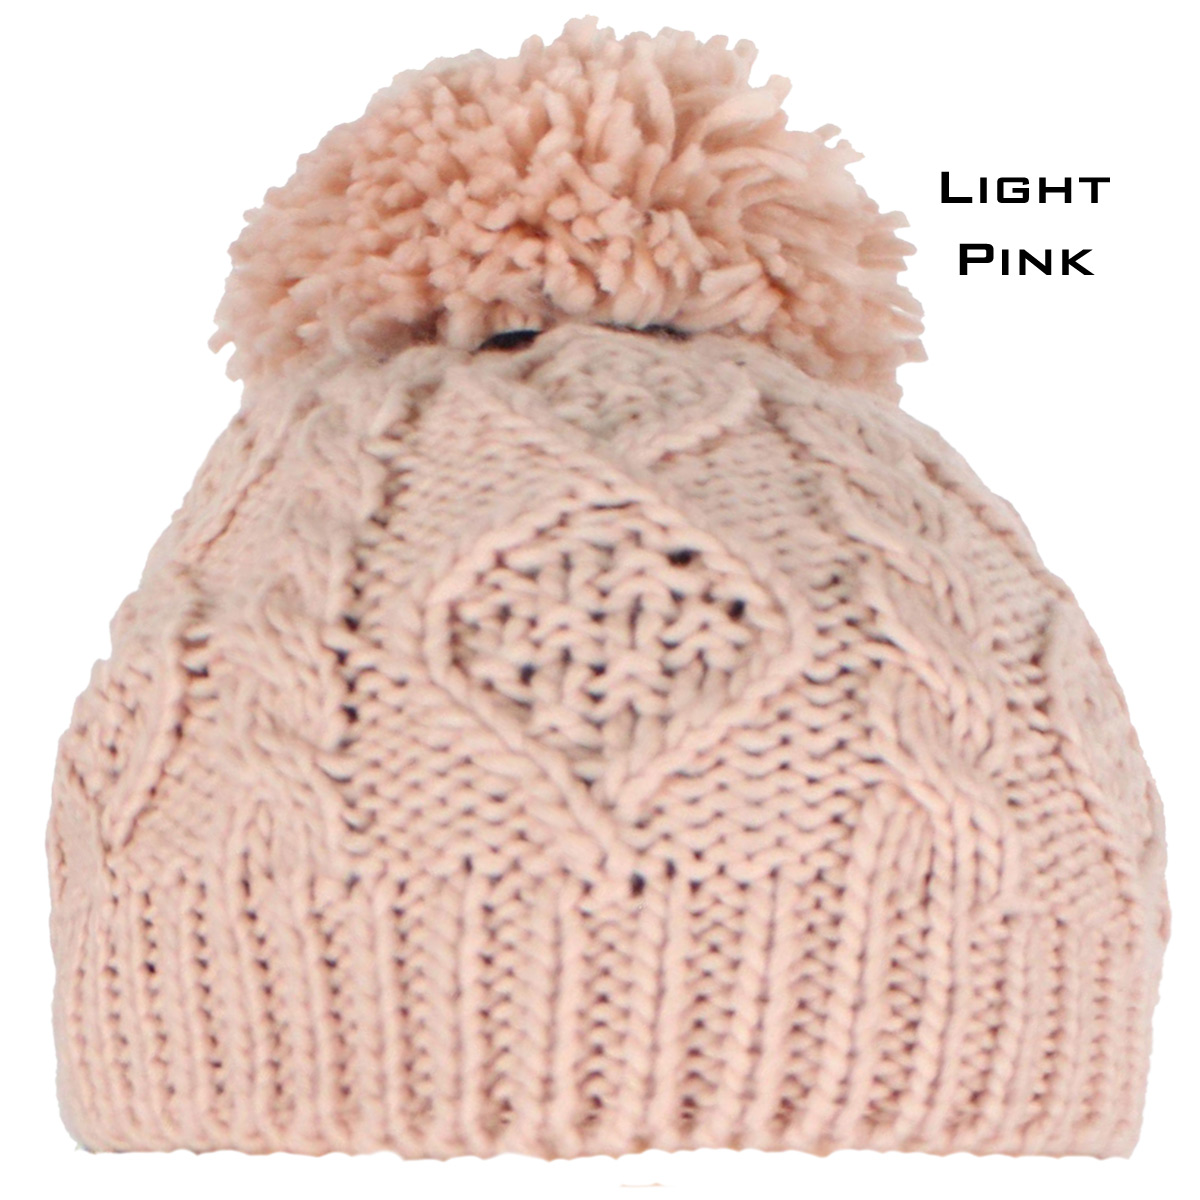 10027 LIGHT PINK/YARN POM POM Knit Winter Hat